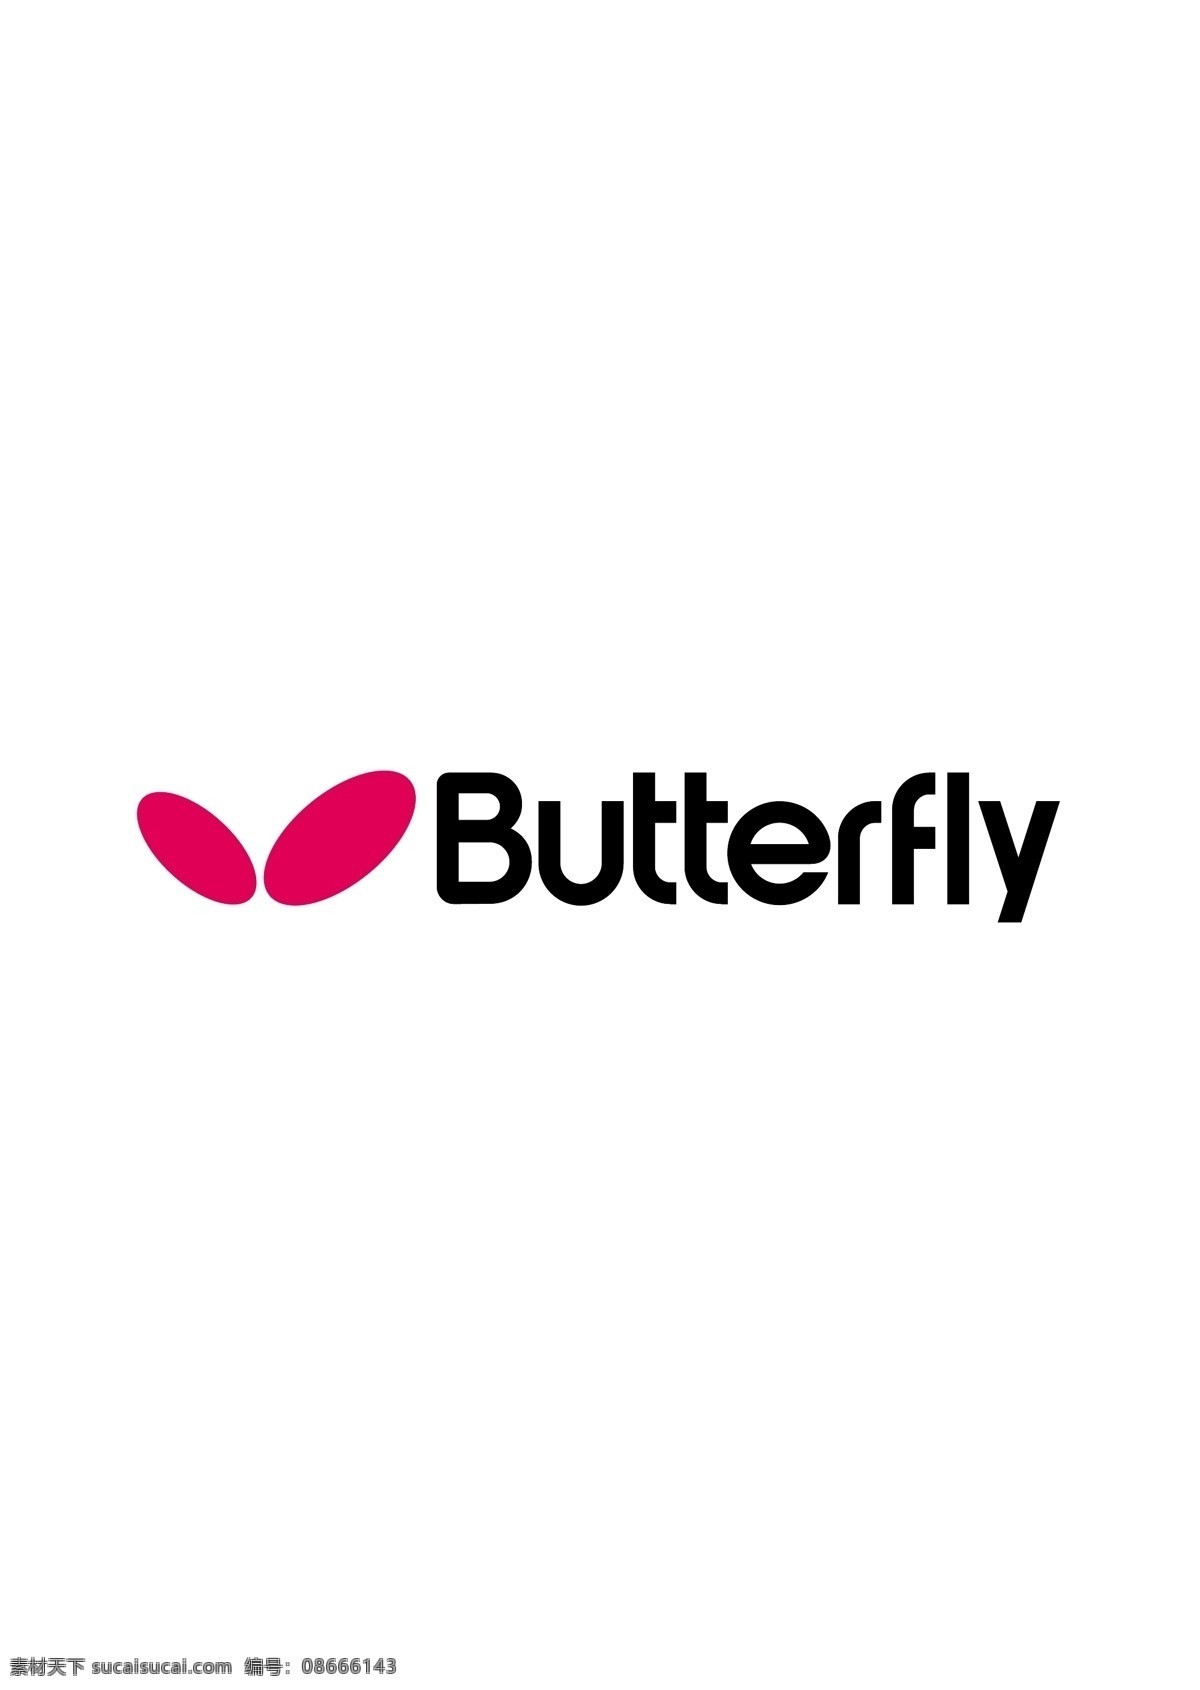 butterfly logo大全 logo 设计欣赏 商业矢量 矢量下载 体育 标志 标志设计 欣赏 网页矢量 矢量图 其他矢量图